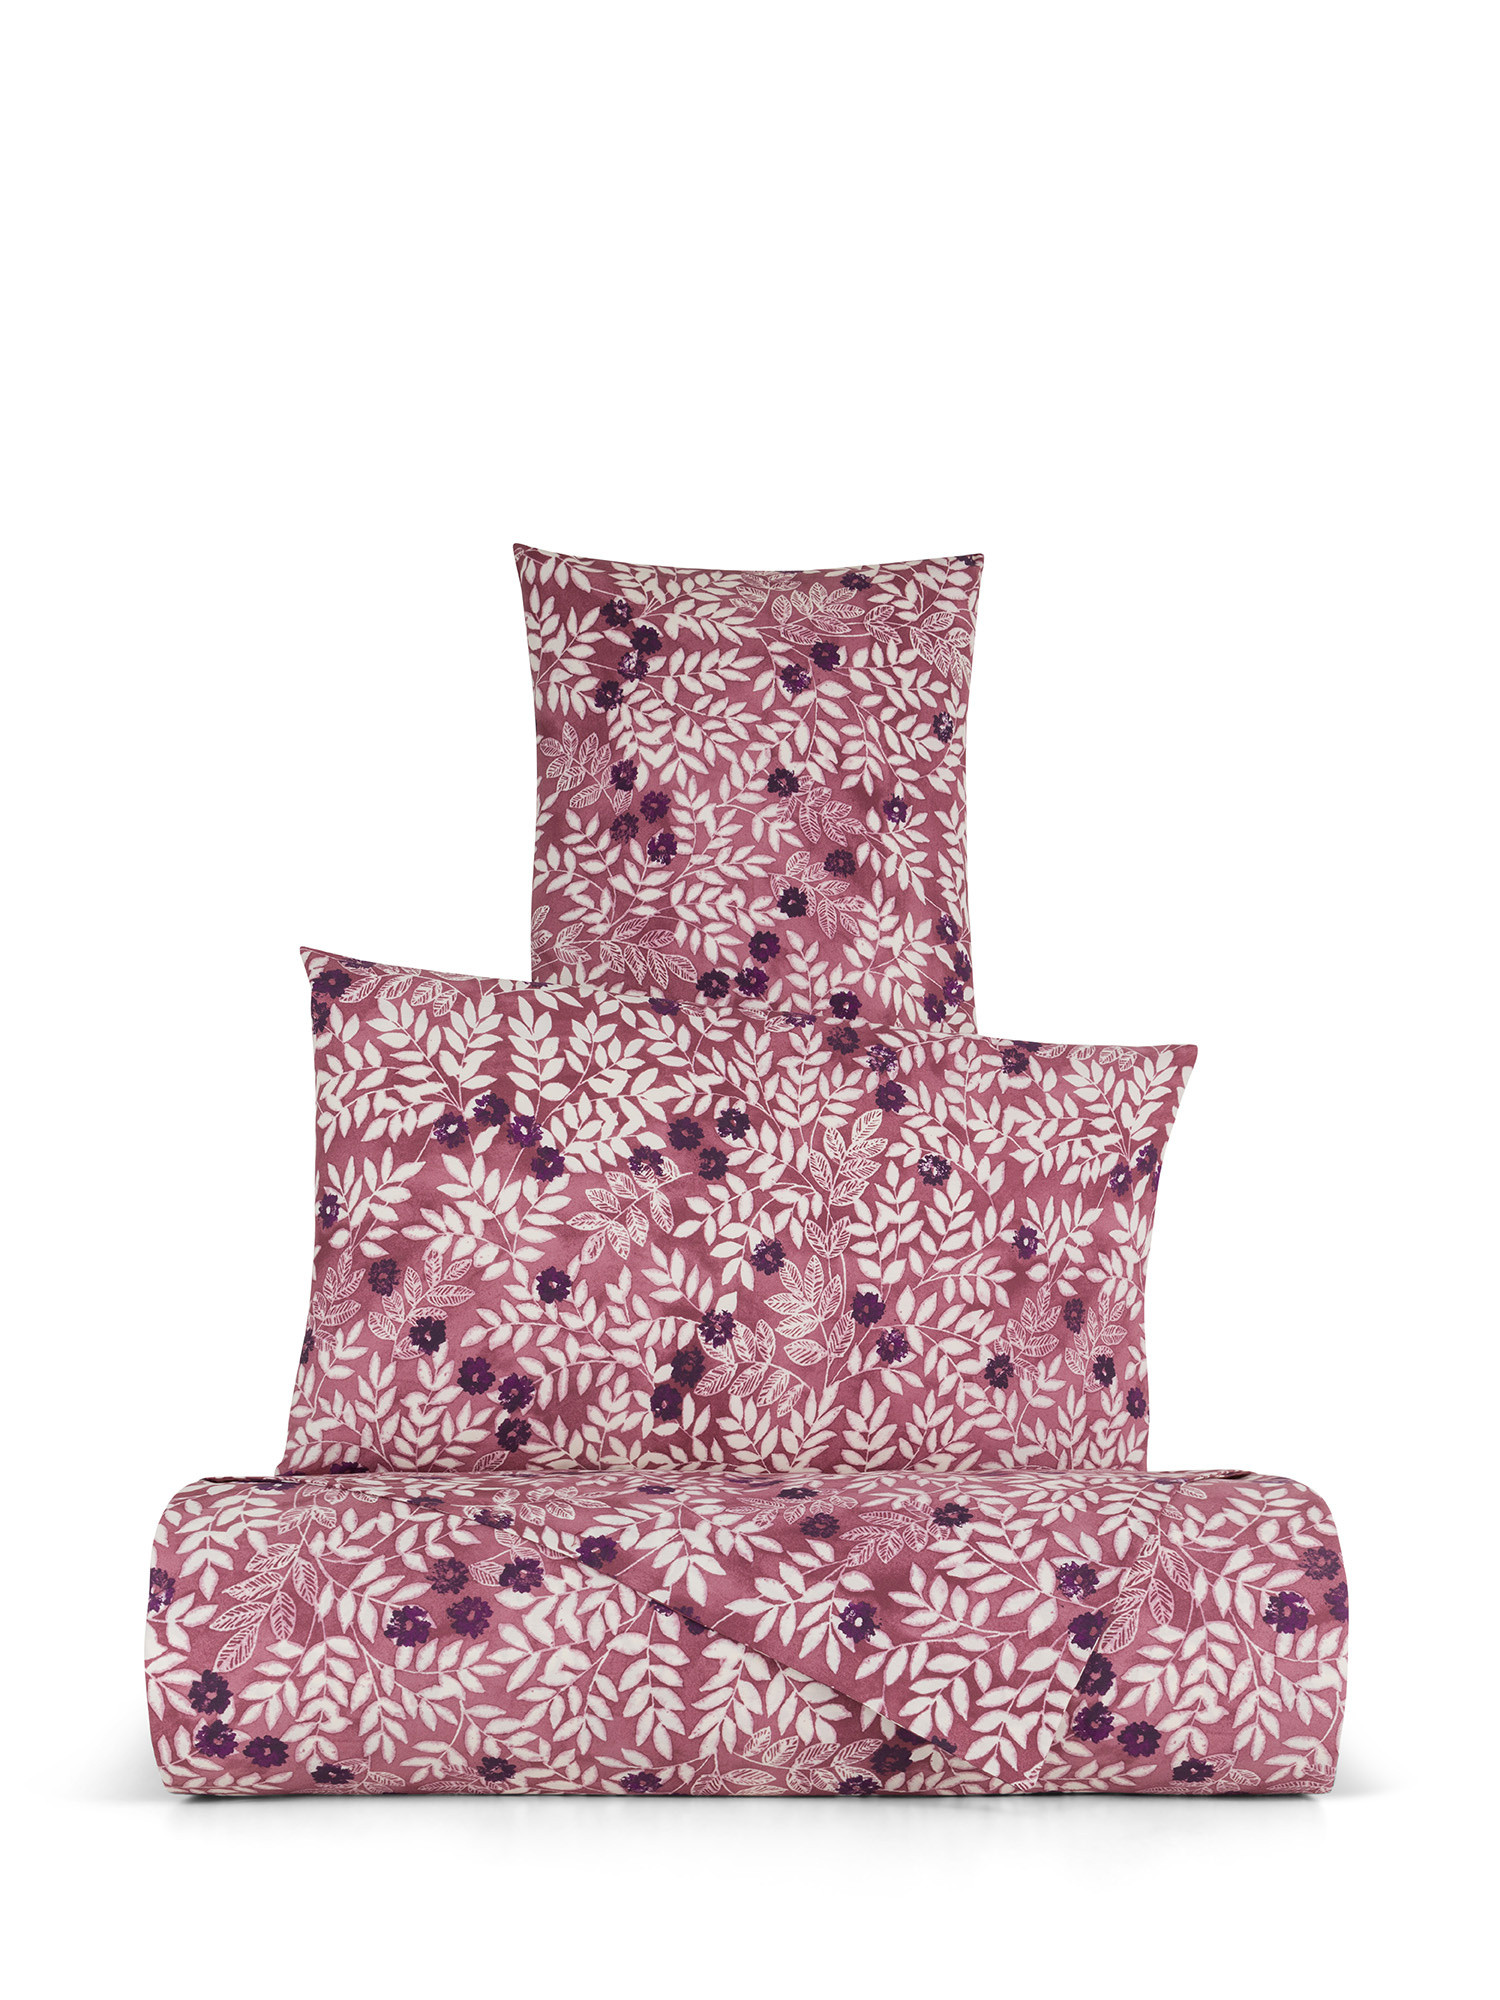 Floral patterned cotton percale duvet cover set, Pink, large image number 0